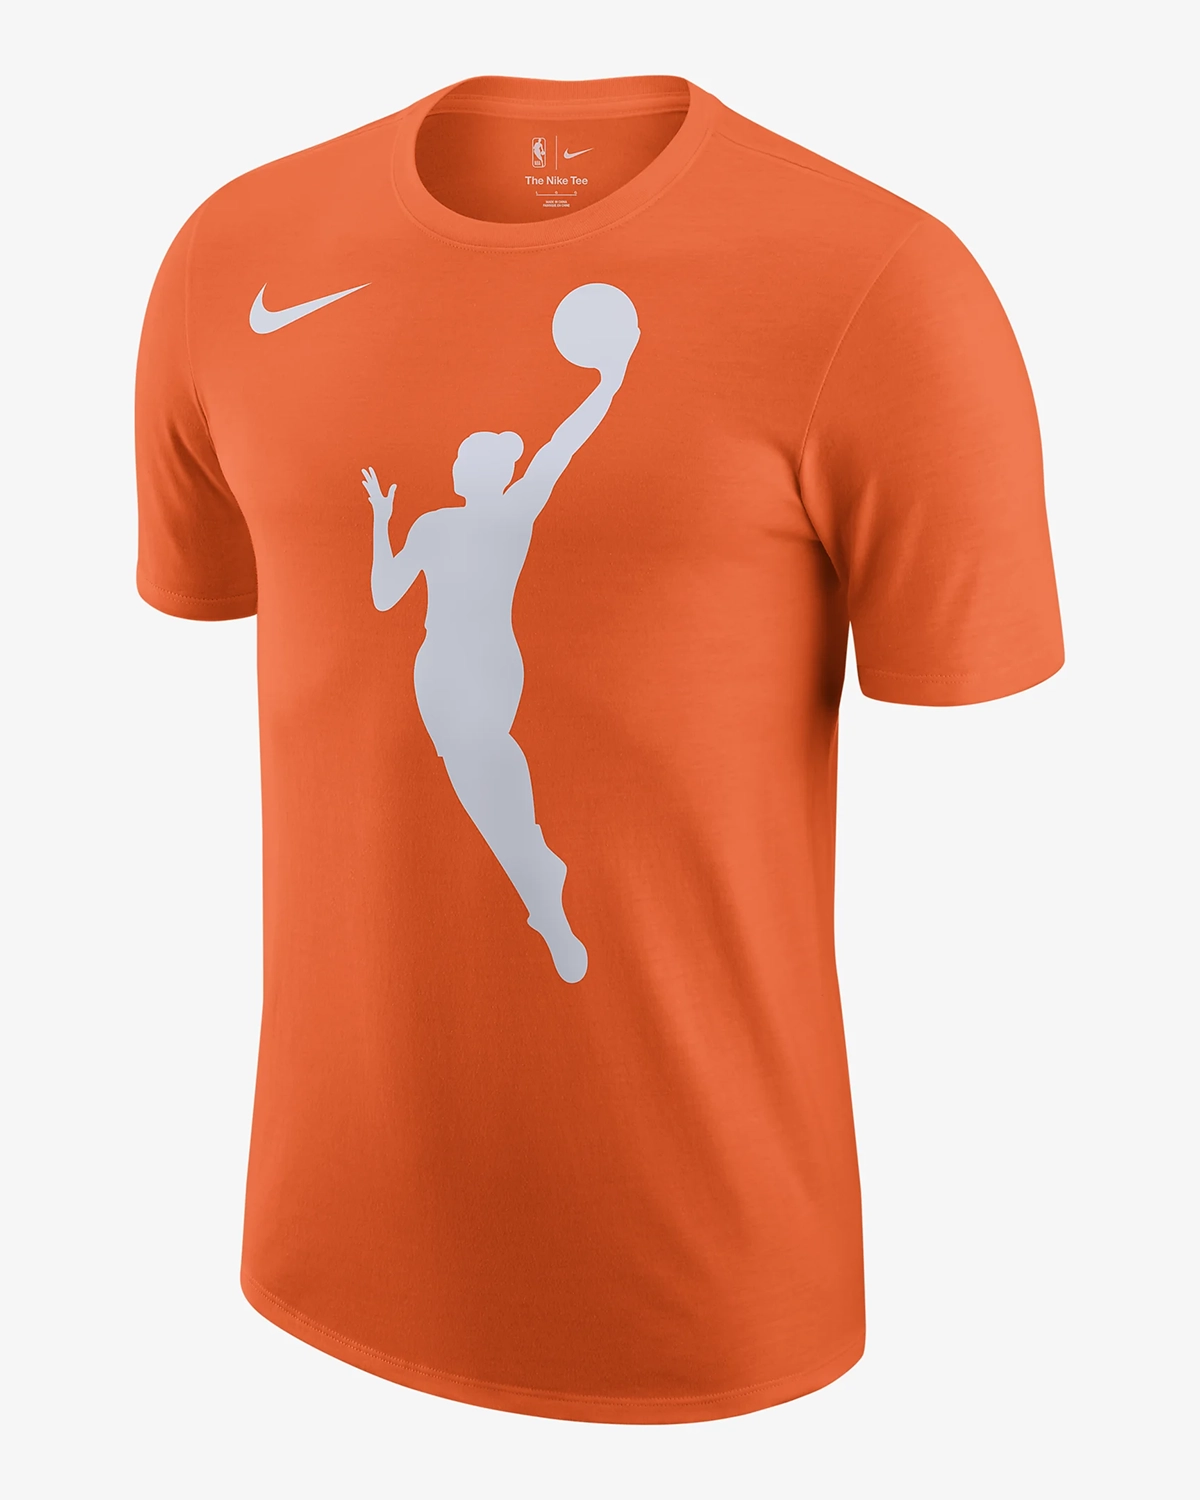 Nike WNBA T Shirt Orange White